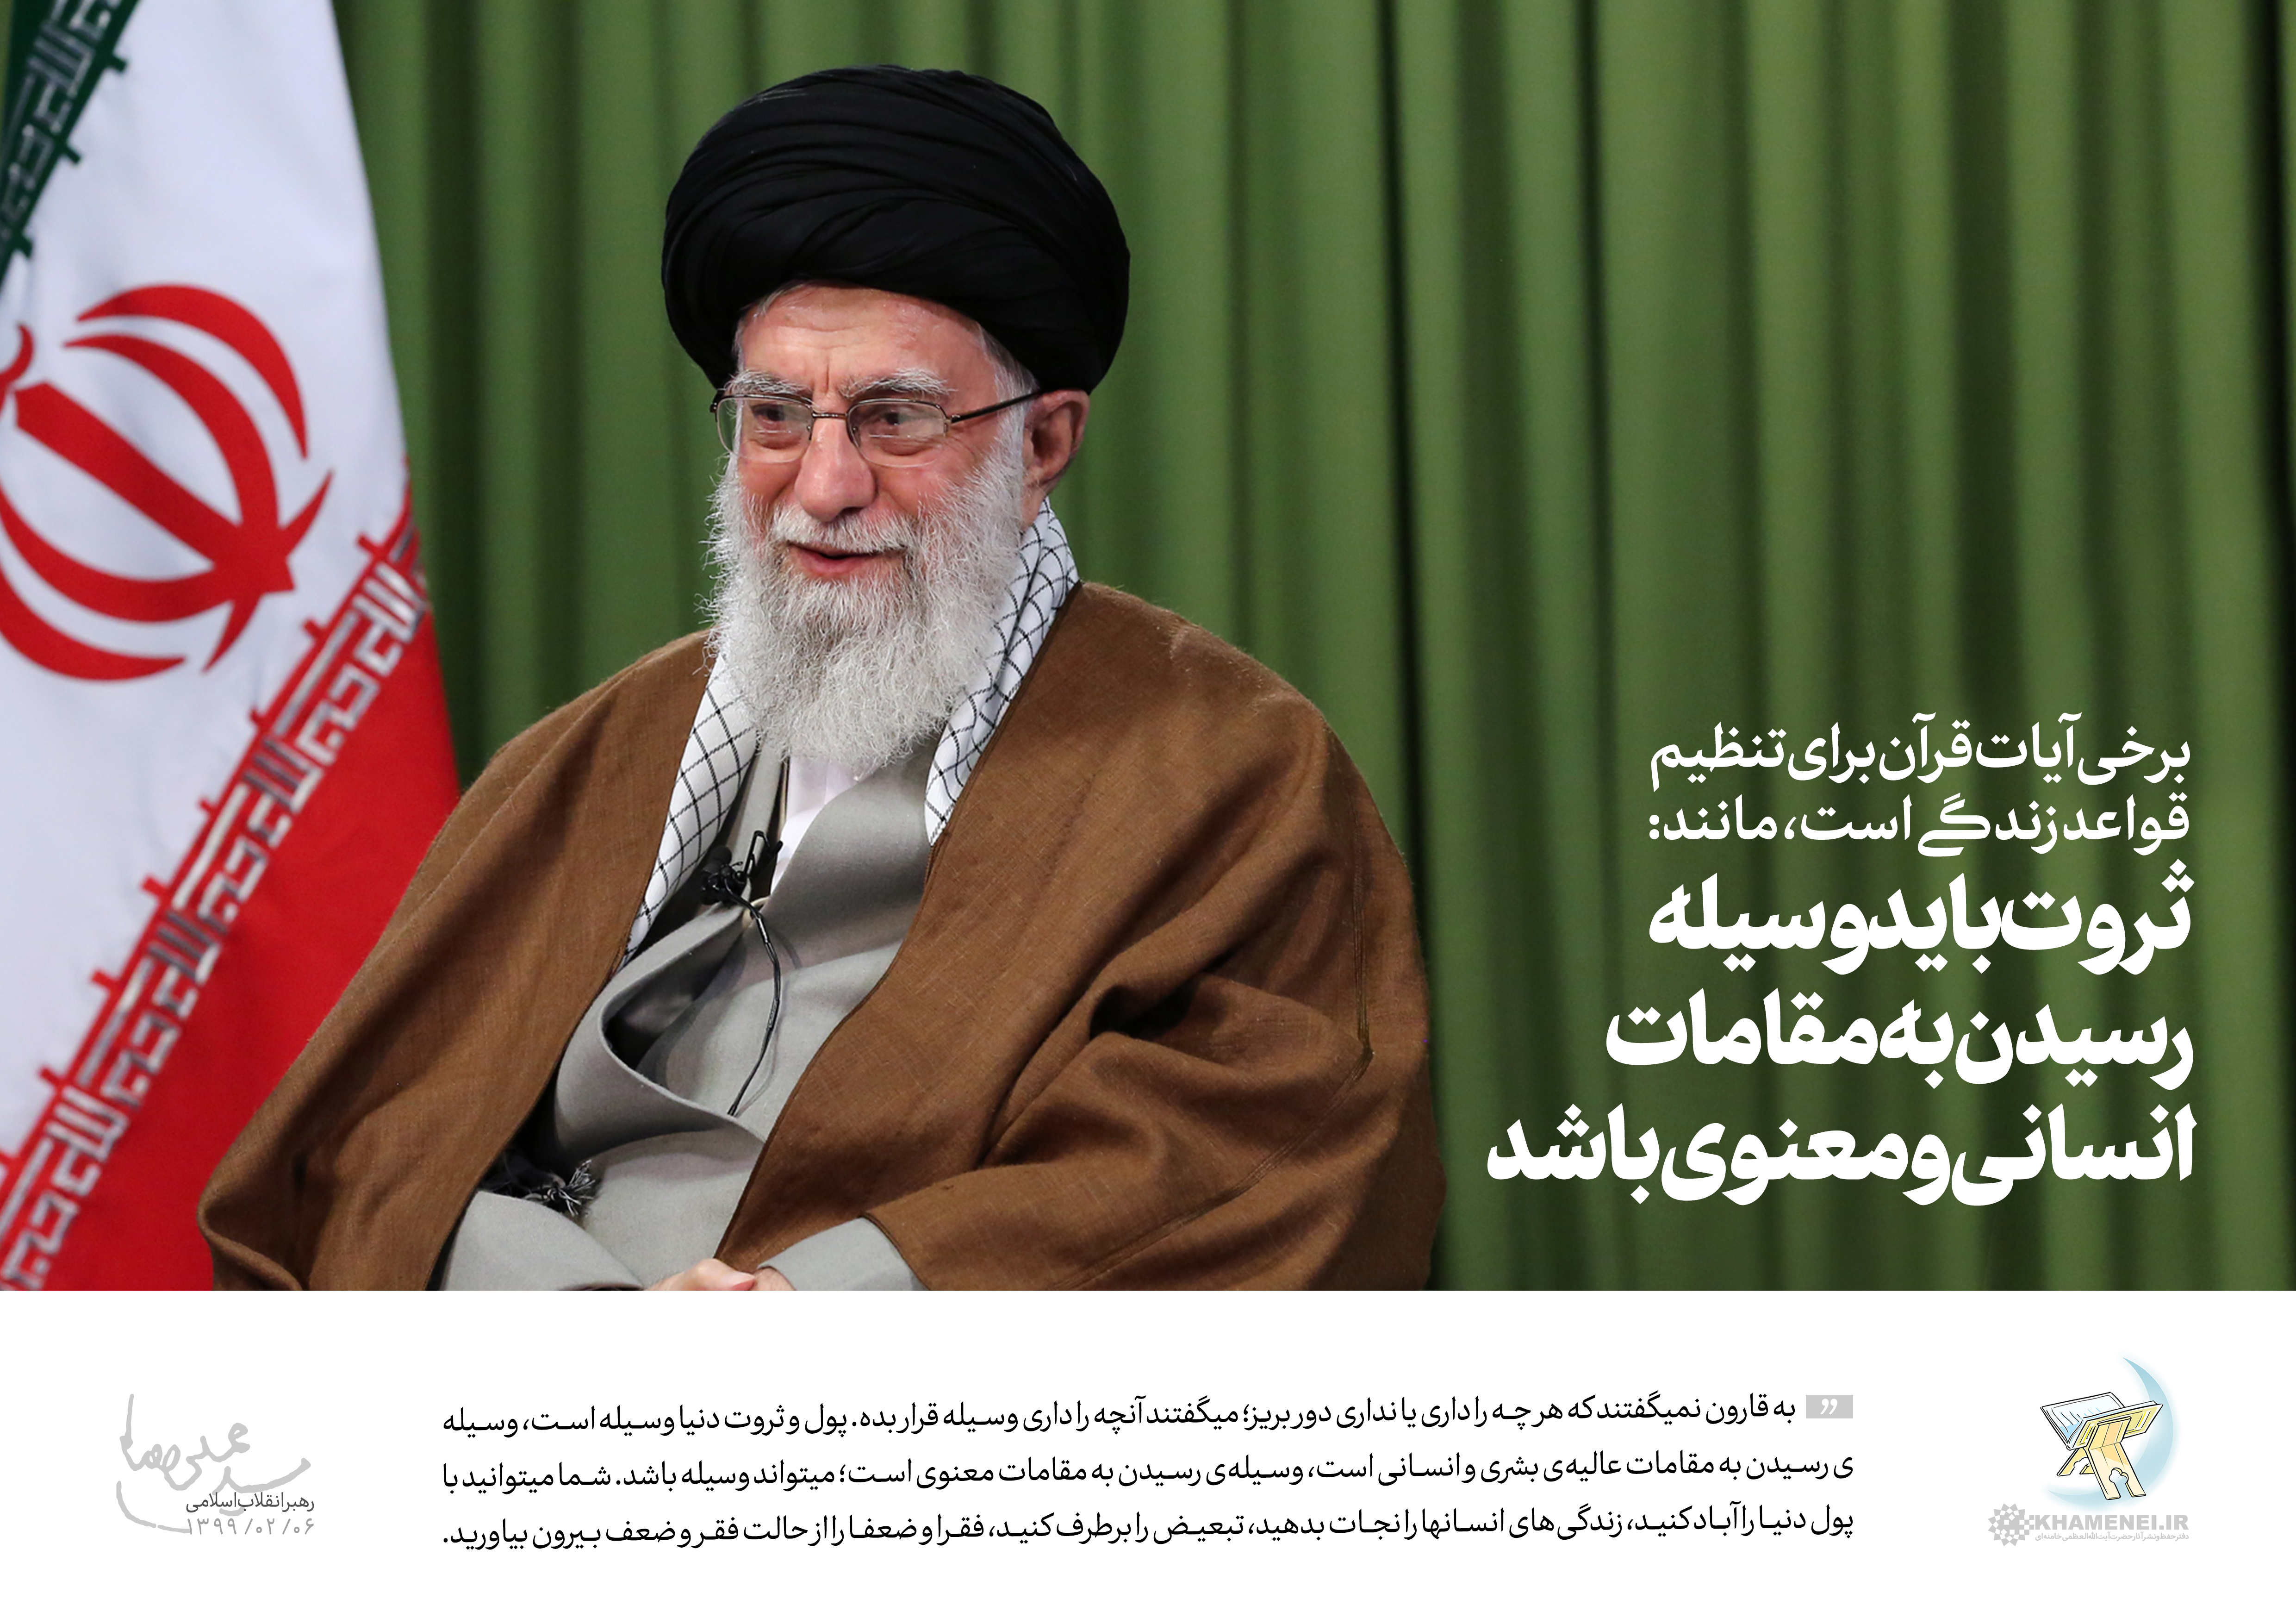 http://idc0-cdn0.khamenei.ir/ndata/news/45432/B/13990207_0445432.jpg